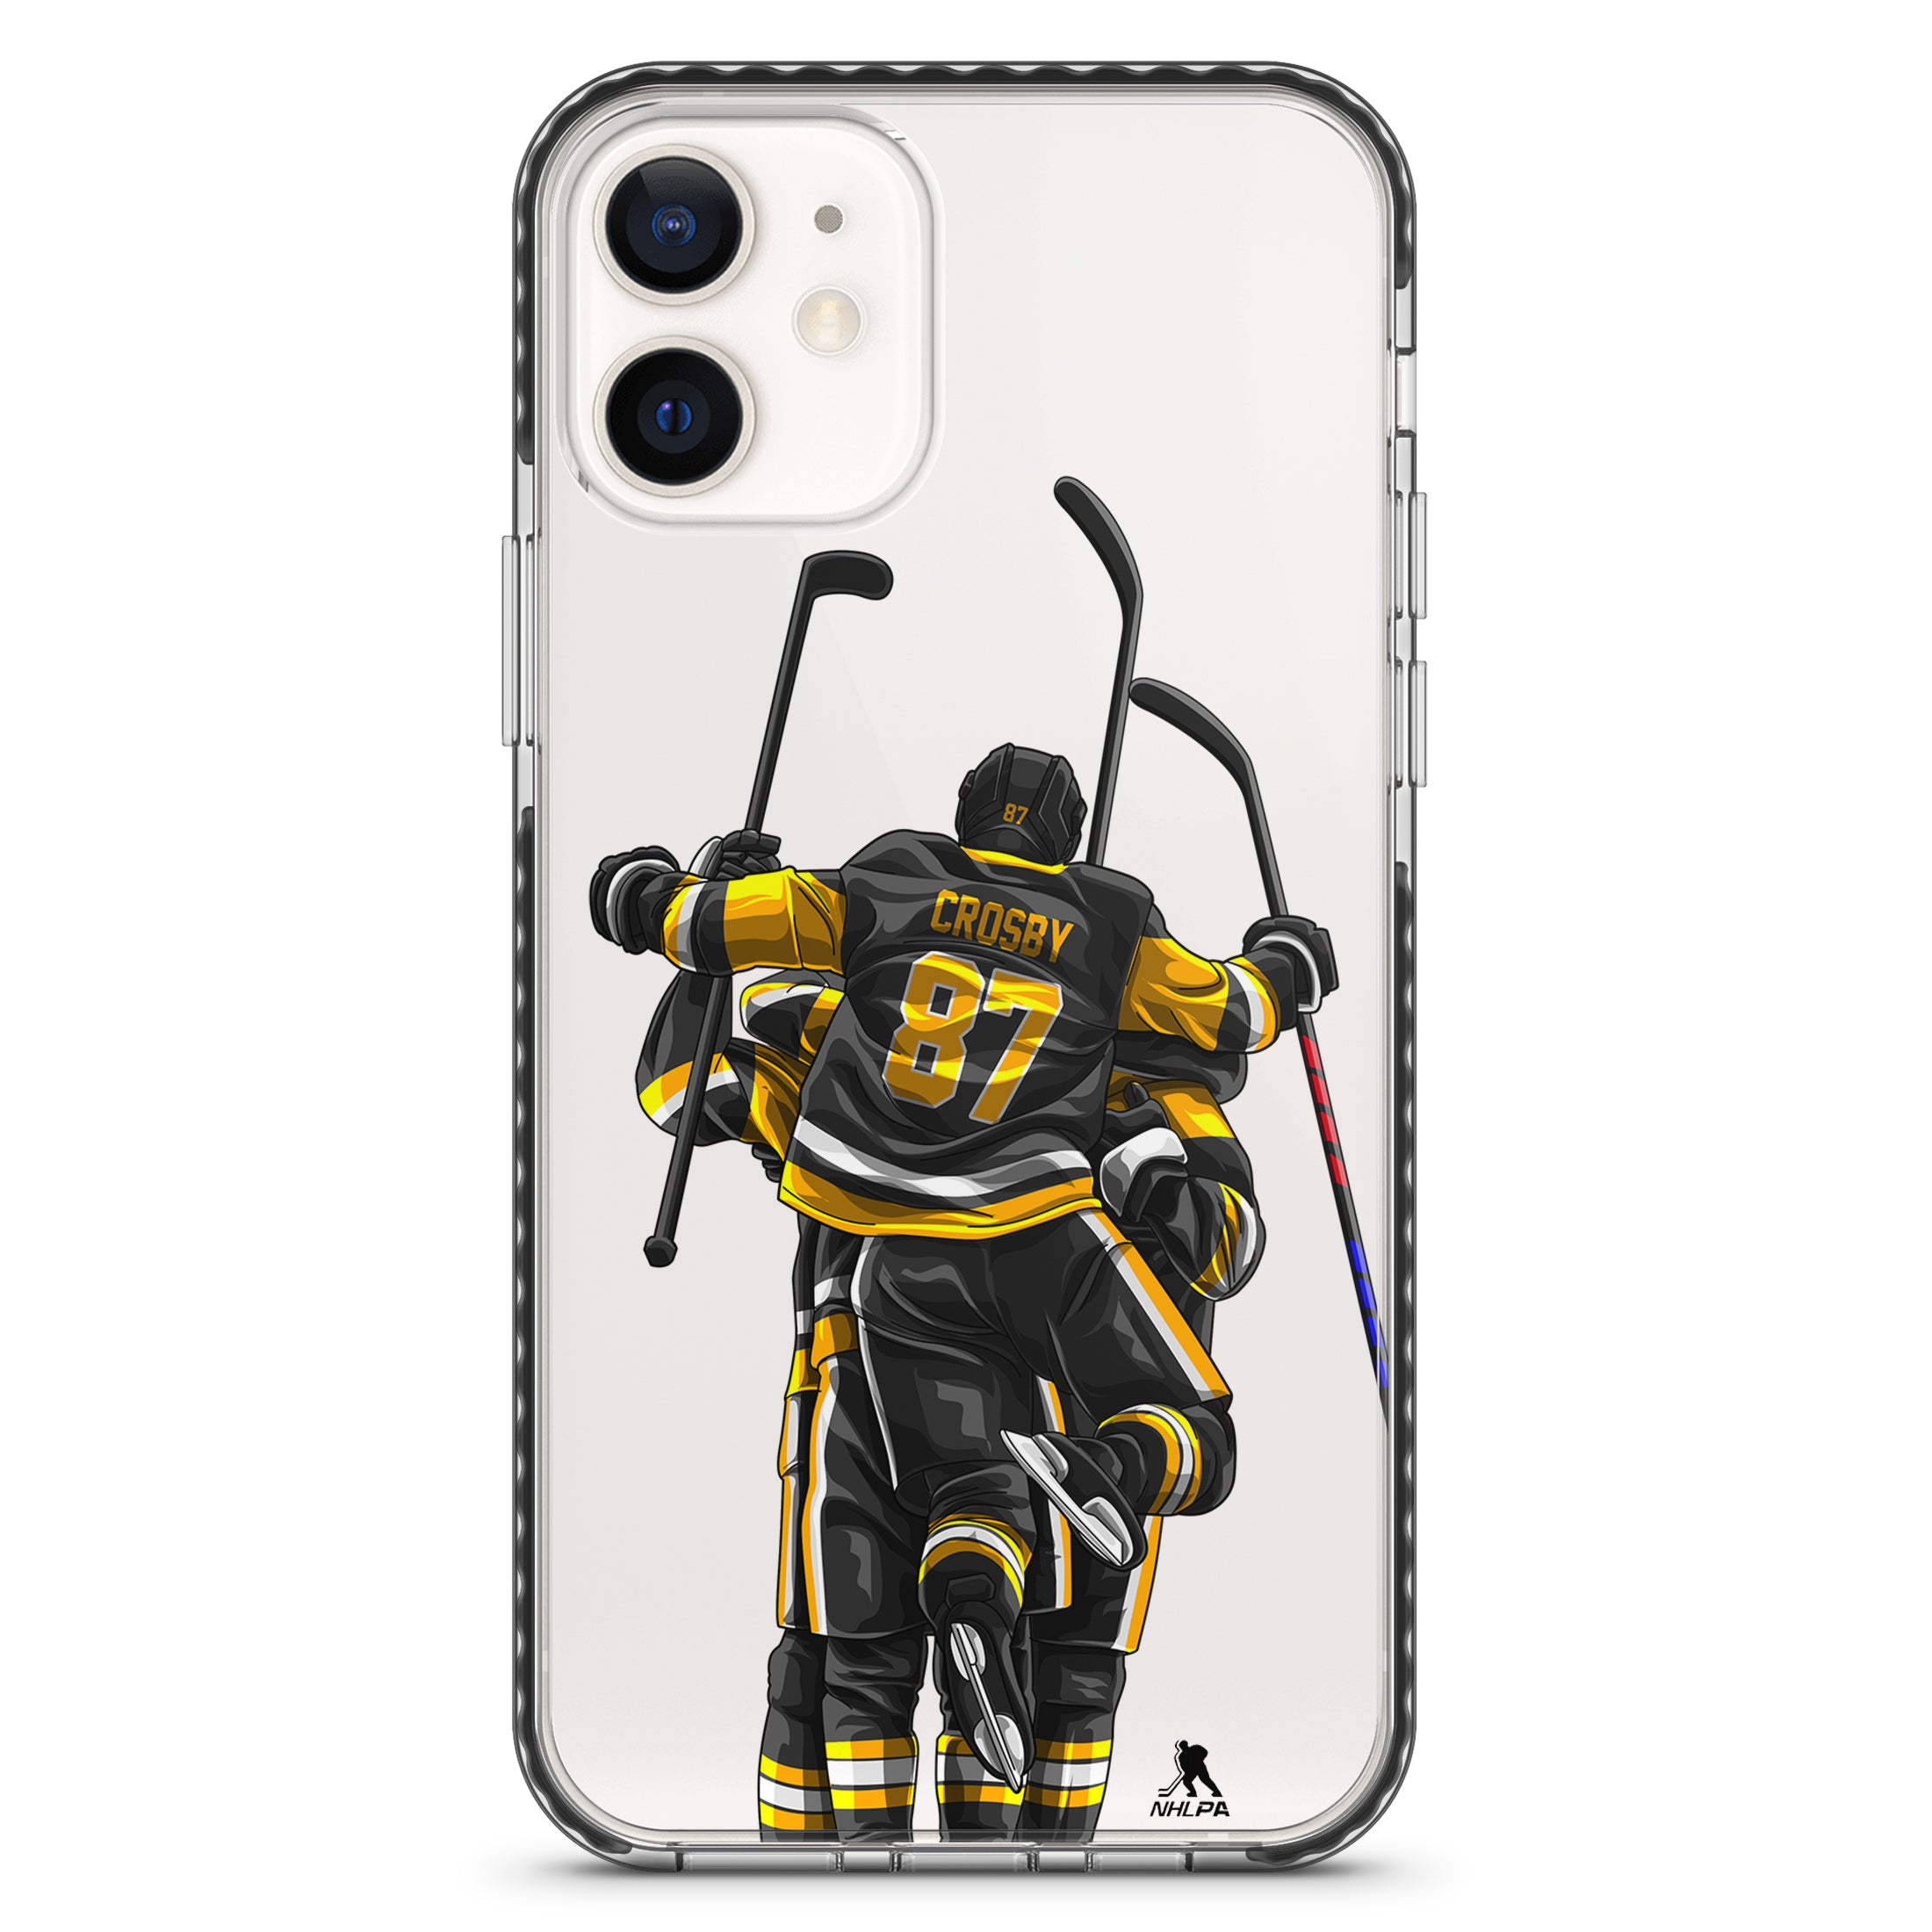 Crosby Jump Clear Series 2.0 Phone Case